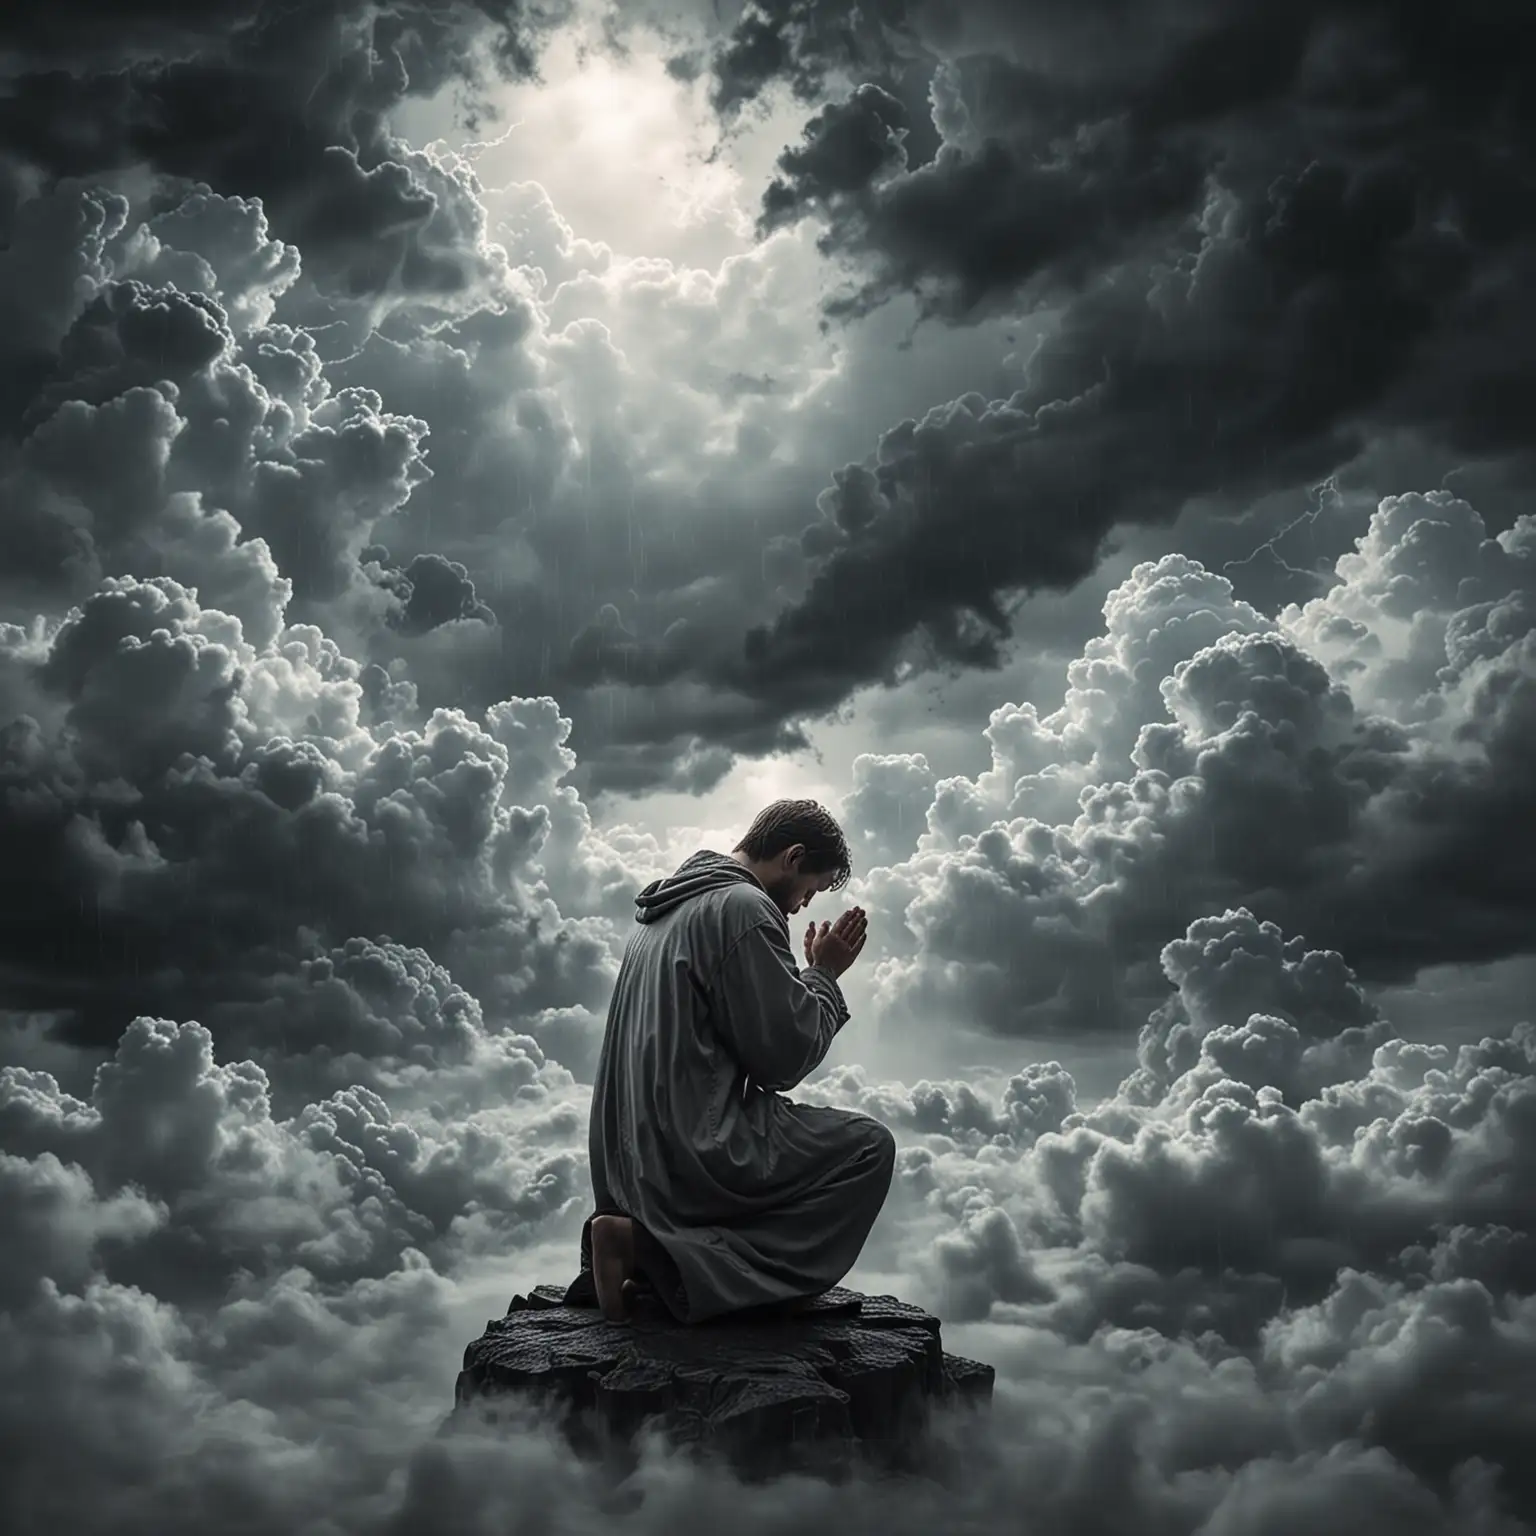 Man-Praying-in-Mystical-Clouds-Under-Gray-Skies